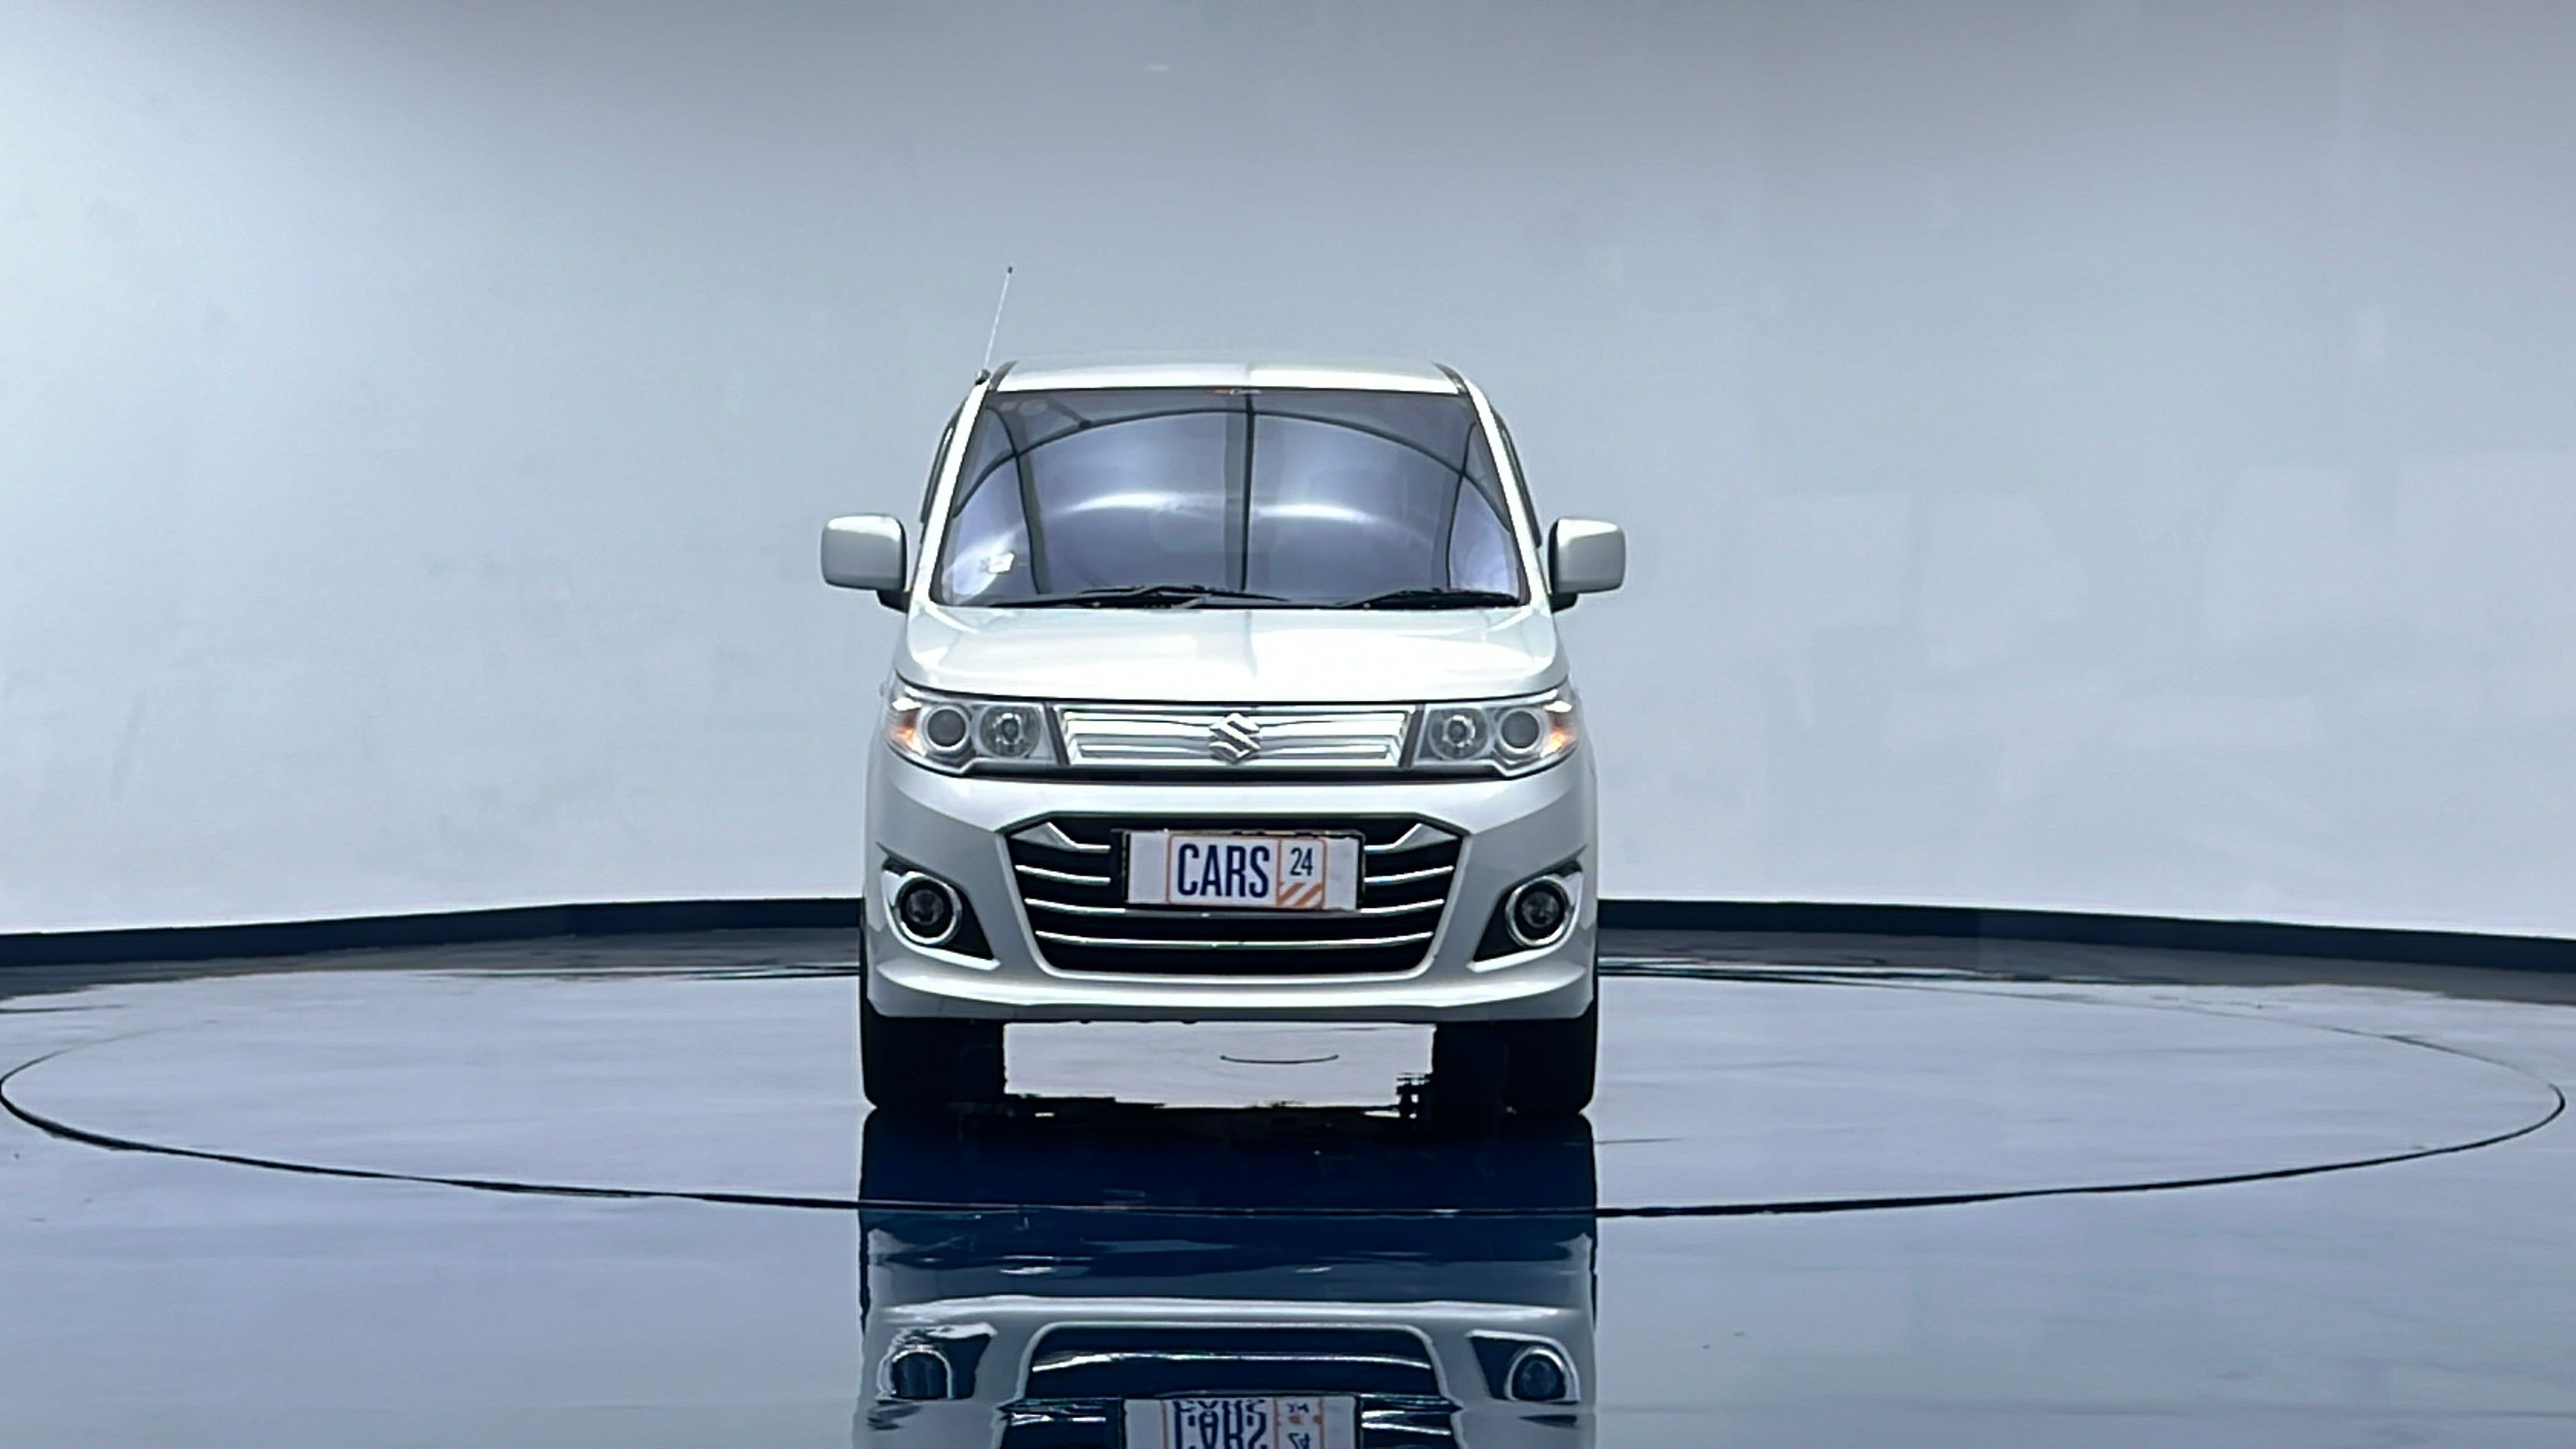 Dijual 2015 Suzuki Karimun Wagon R GS GS Bekas